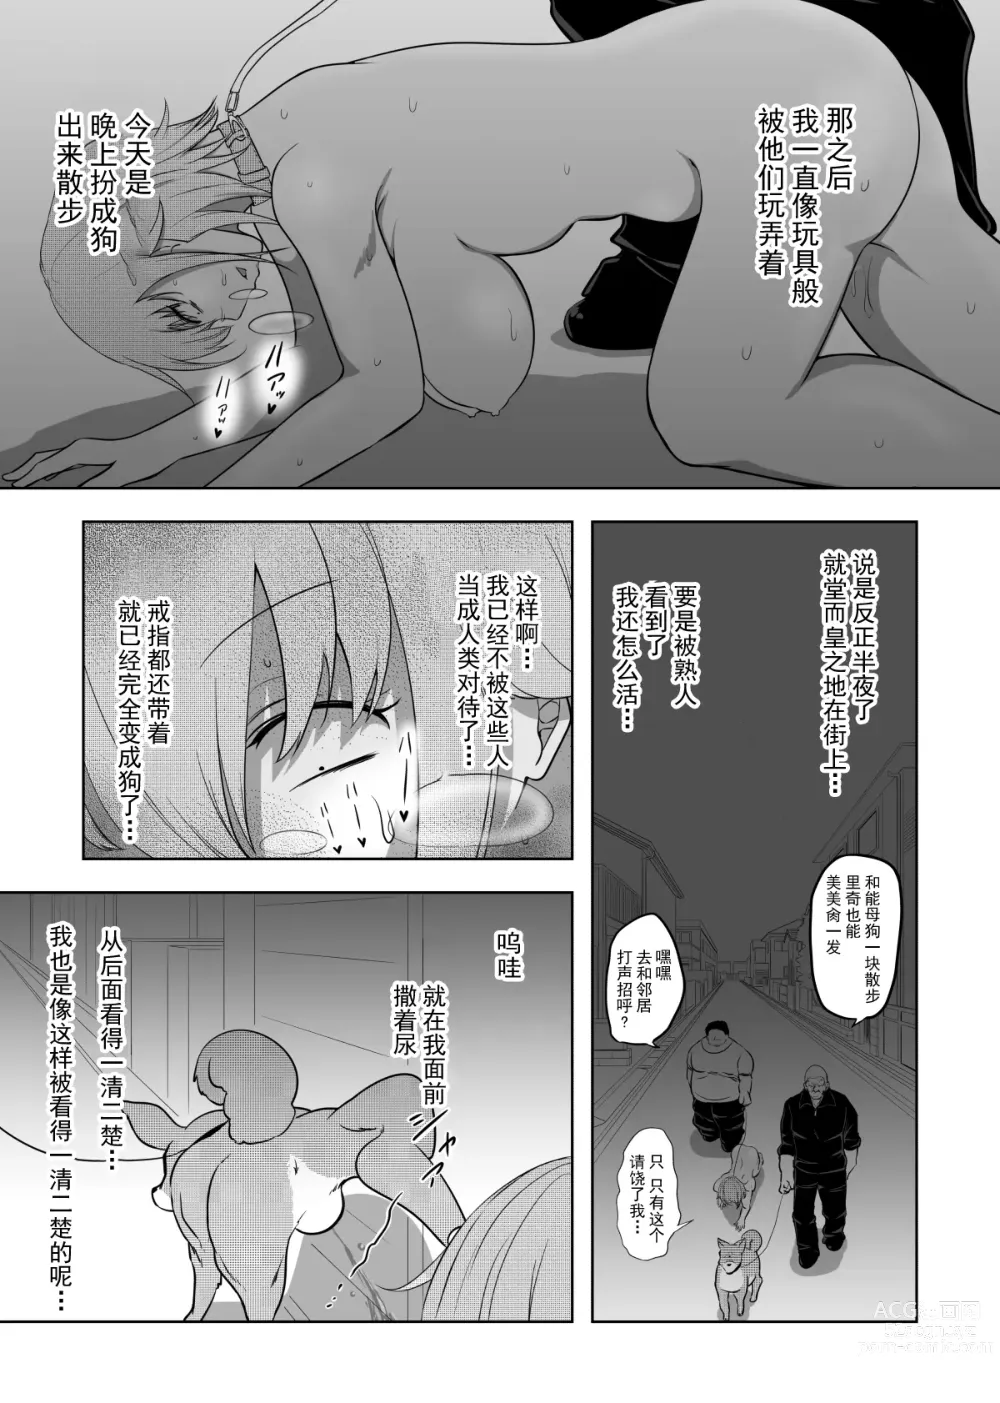 Page 26 of doujinshi 老婆的愿望名为毁灭